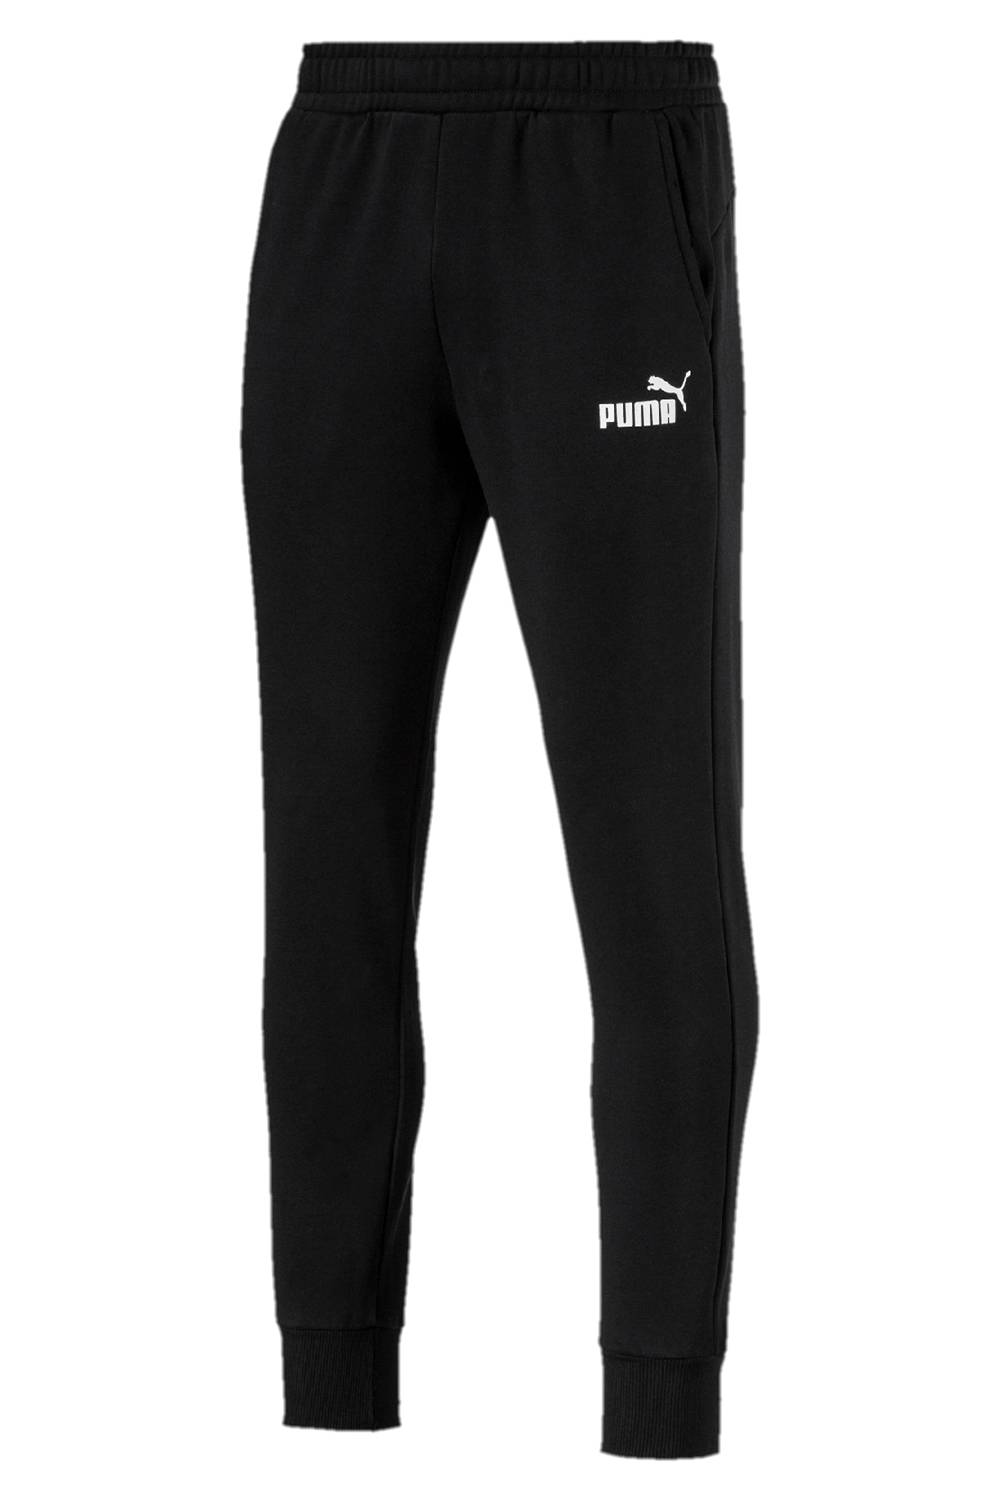 PUMA - Pantalon Deportivo